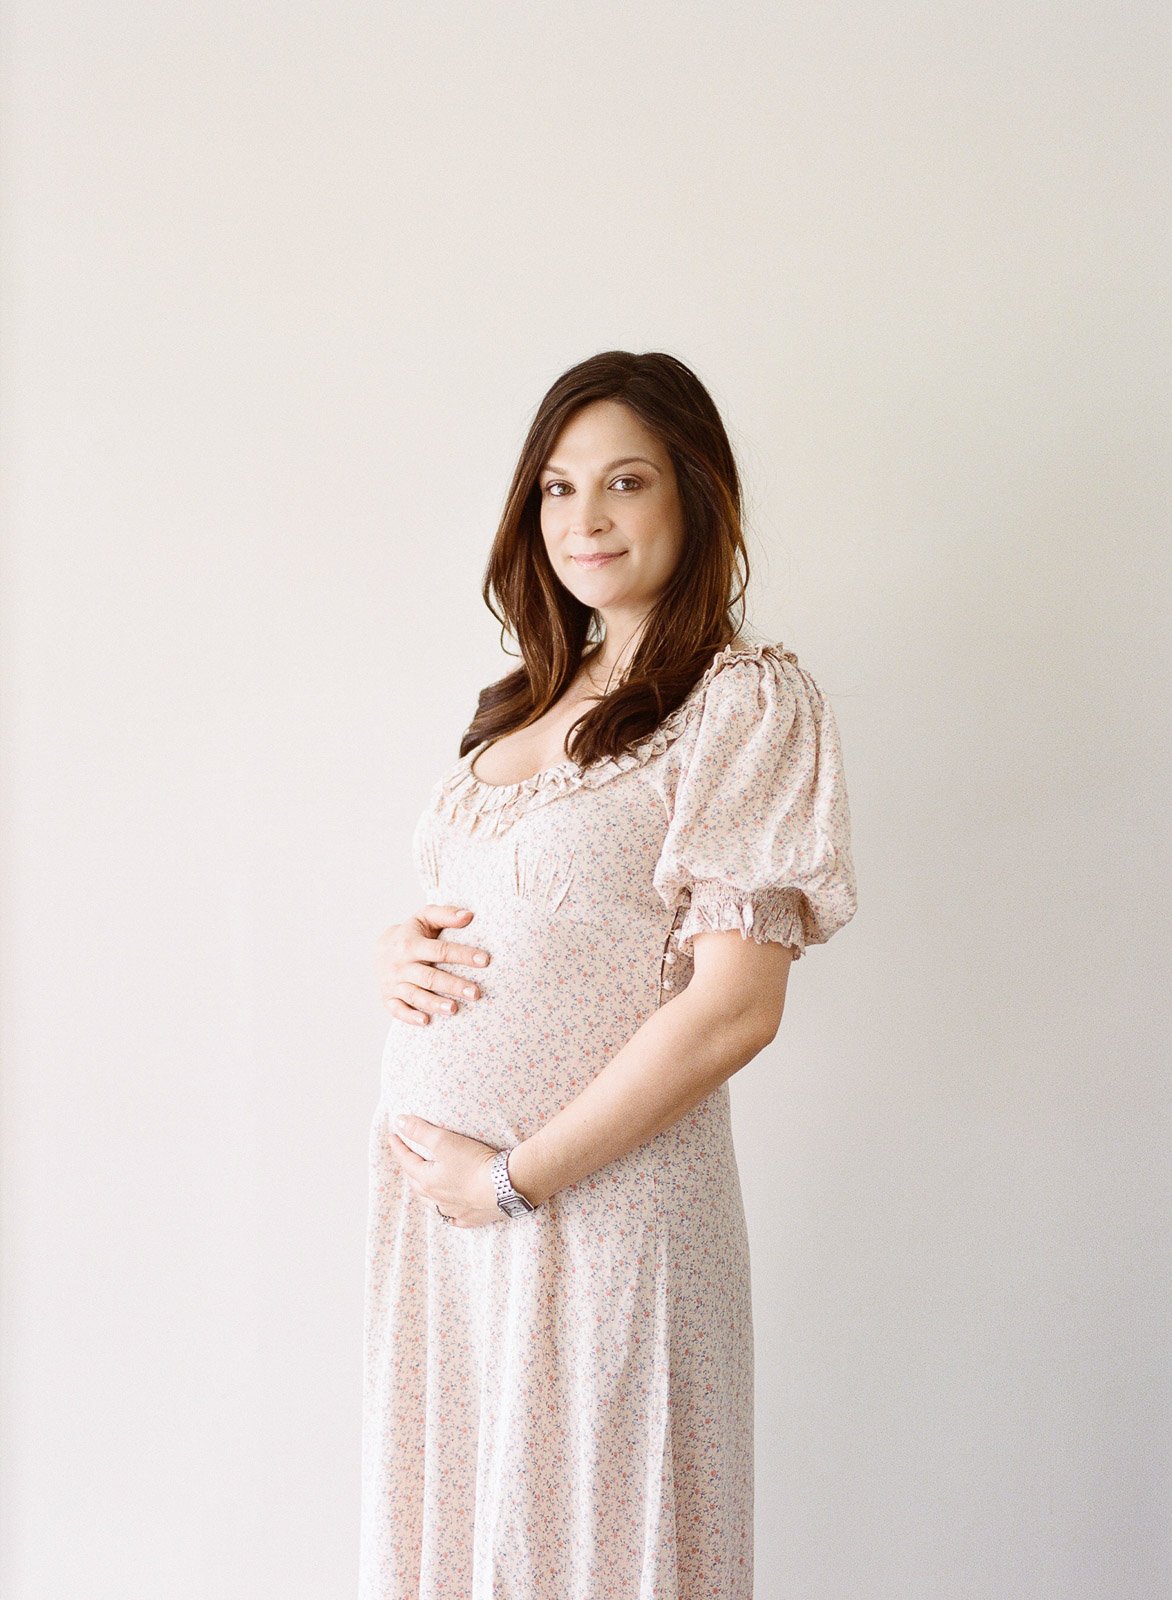 Nirmel Maternity by Michelle Lange Photography-3.jpg